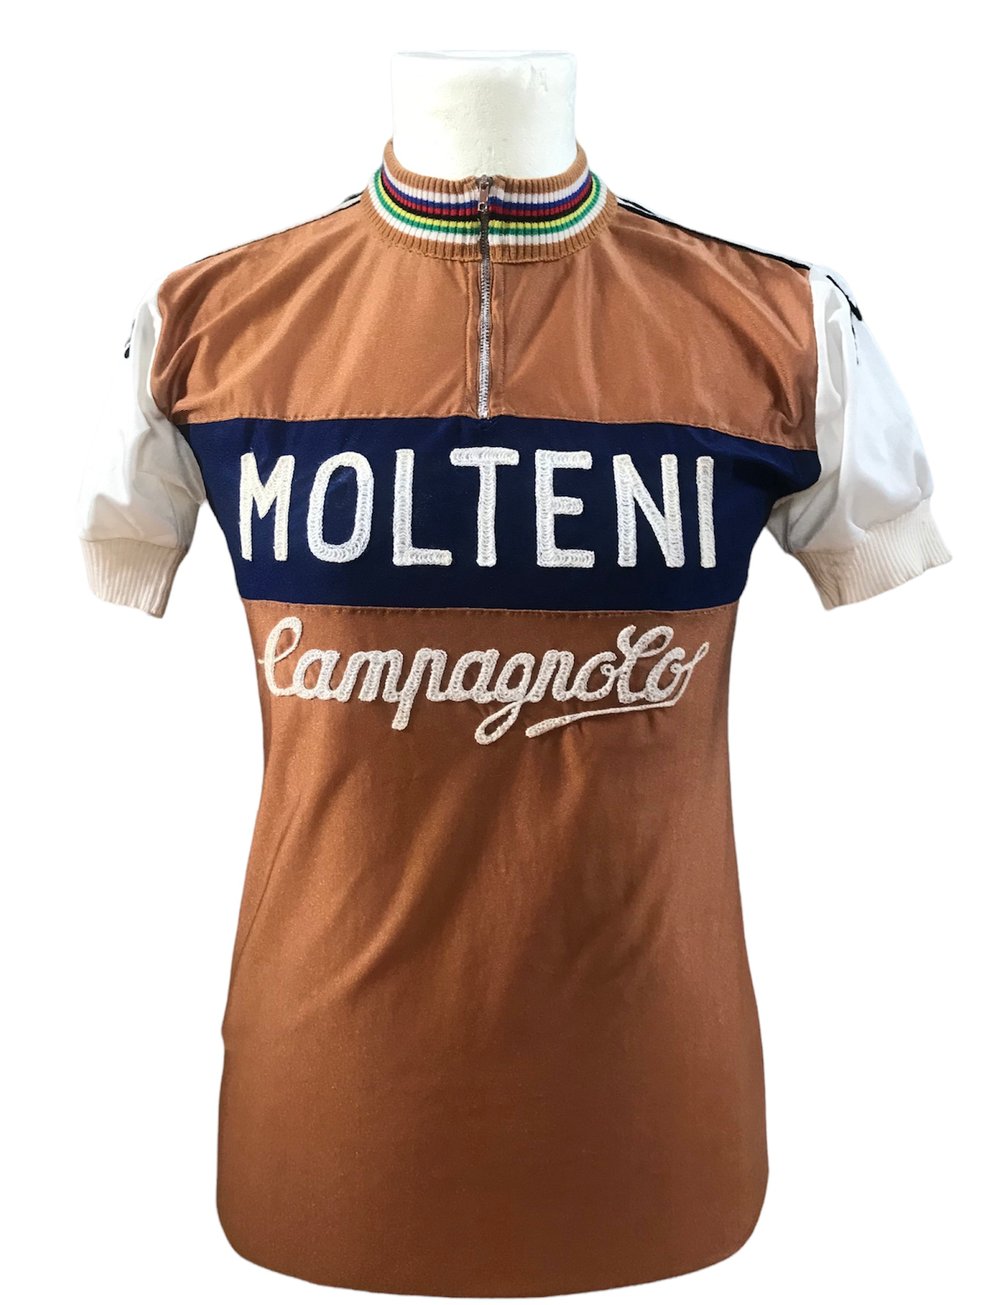  Eddy Merckx ðŸ‡§ðŸ‡ª 1976 Molteni Campagnolo - Prototype Time Trial jersey 